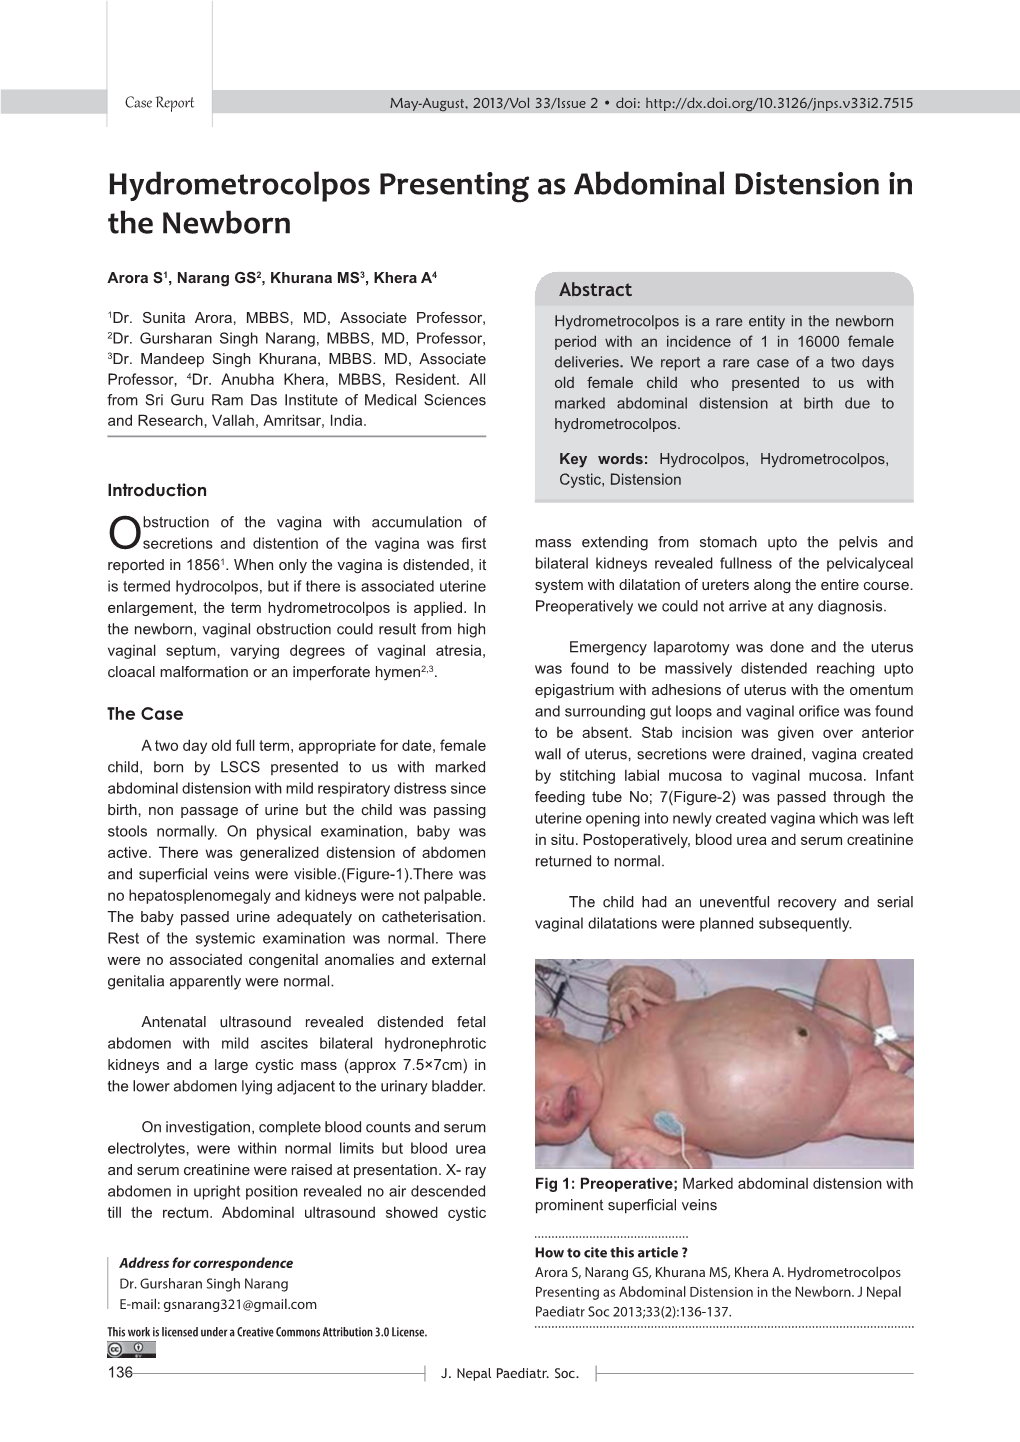 Hydrometrocolpos Presenting As Abdominal Distension in the Newborn